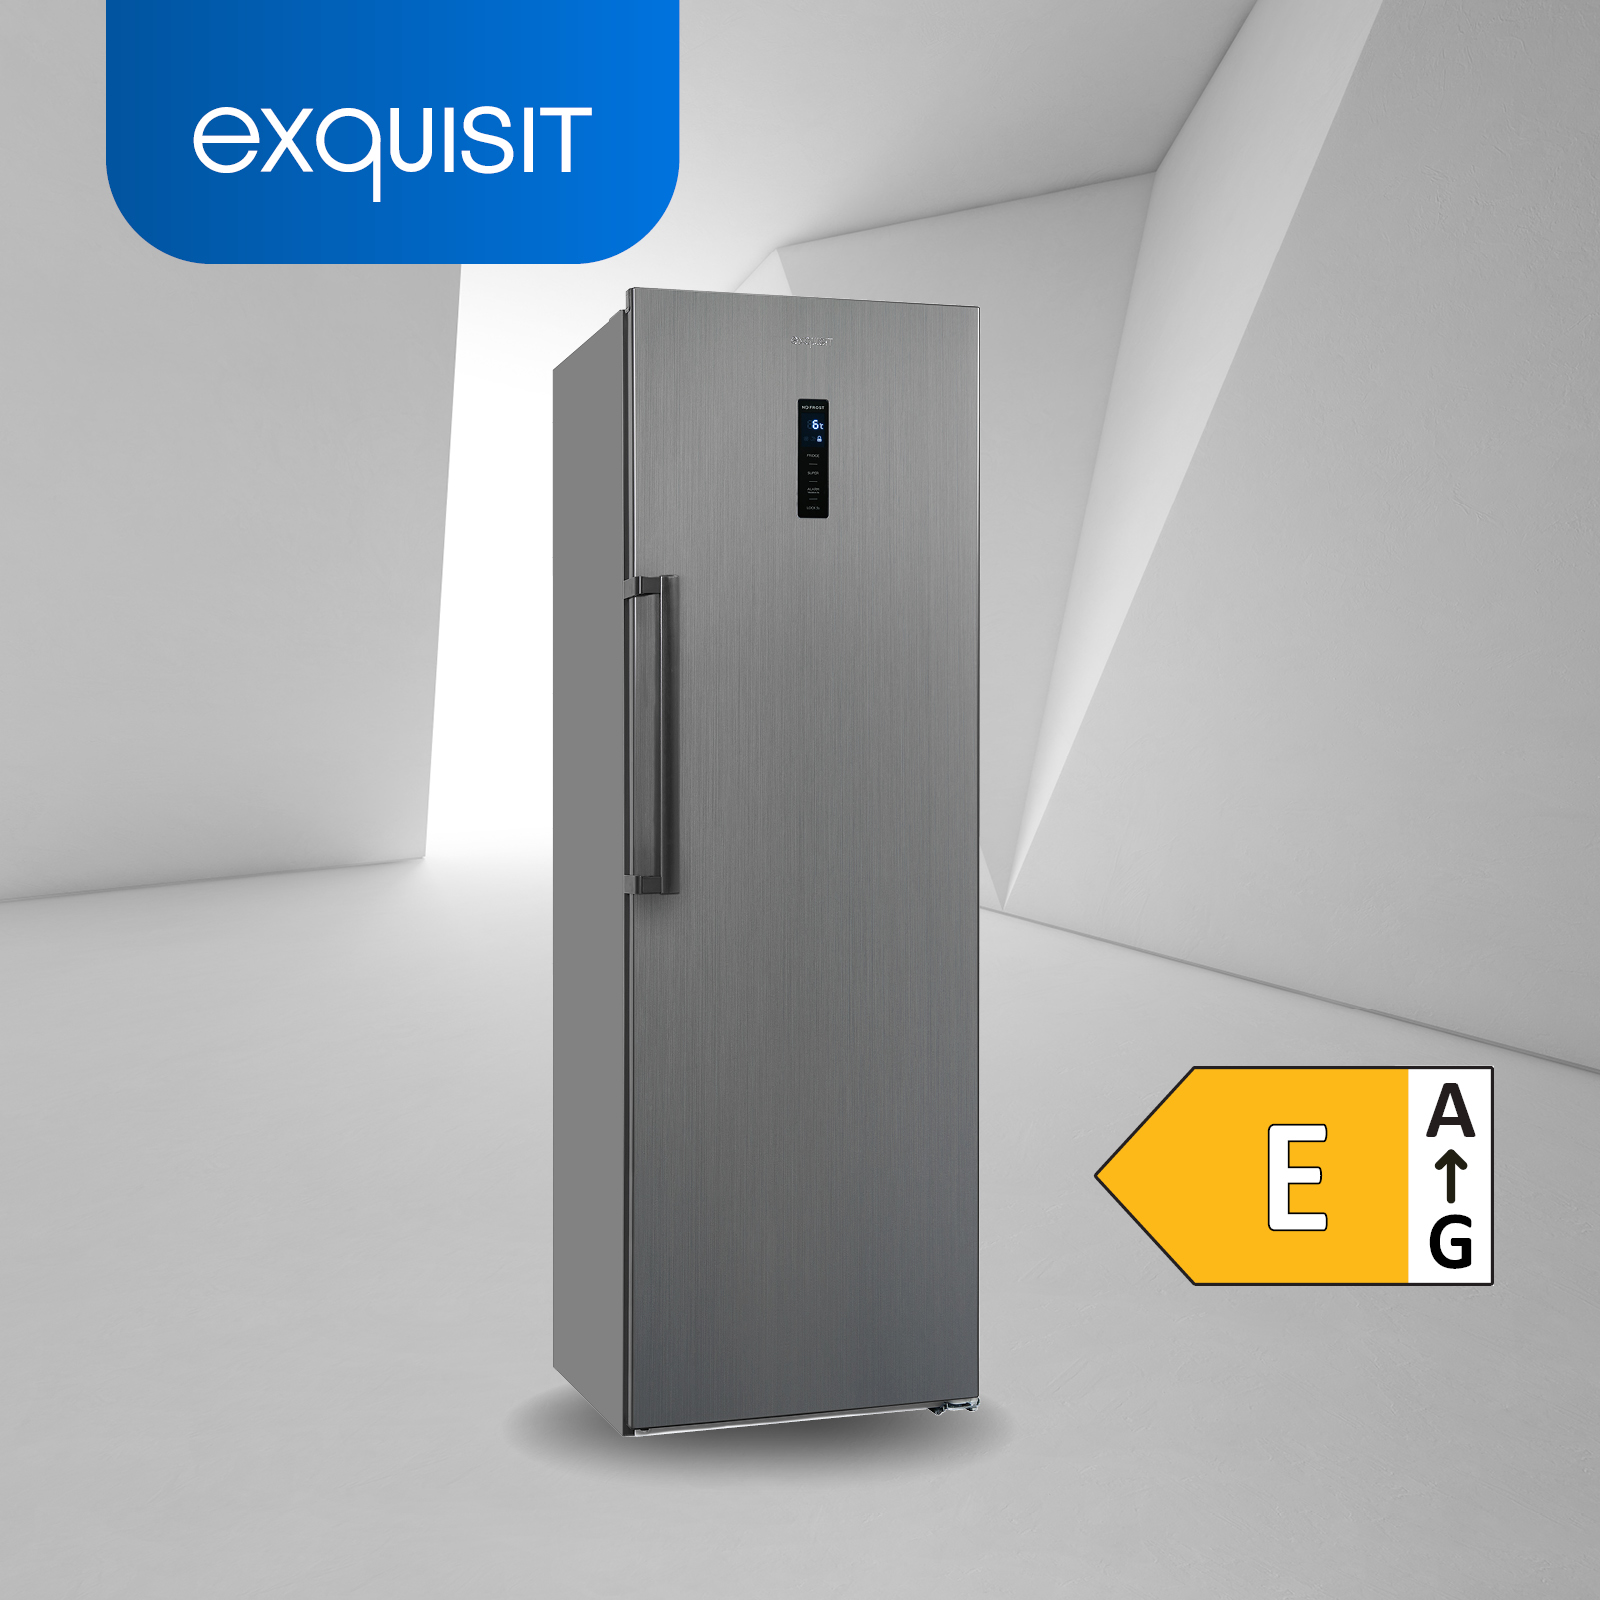 EXQUISIT KS360-V-HE-040E inoxlook-az Kühlschrank mm kWh/Jahr, (118,00 hoch, 1850 E, Edelstahloptik)